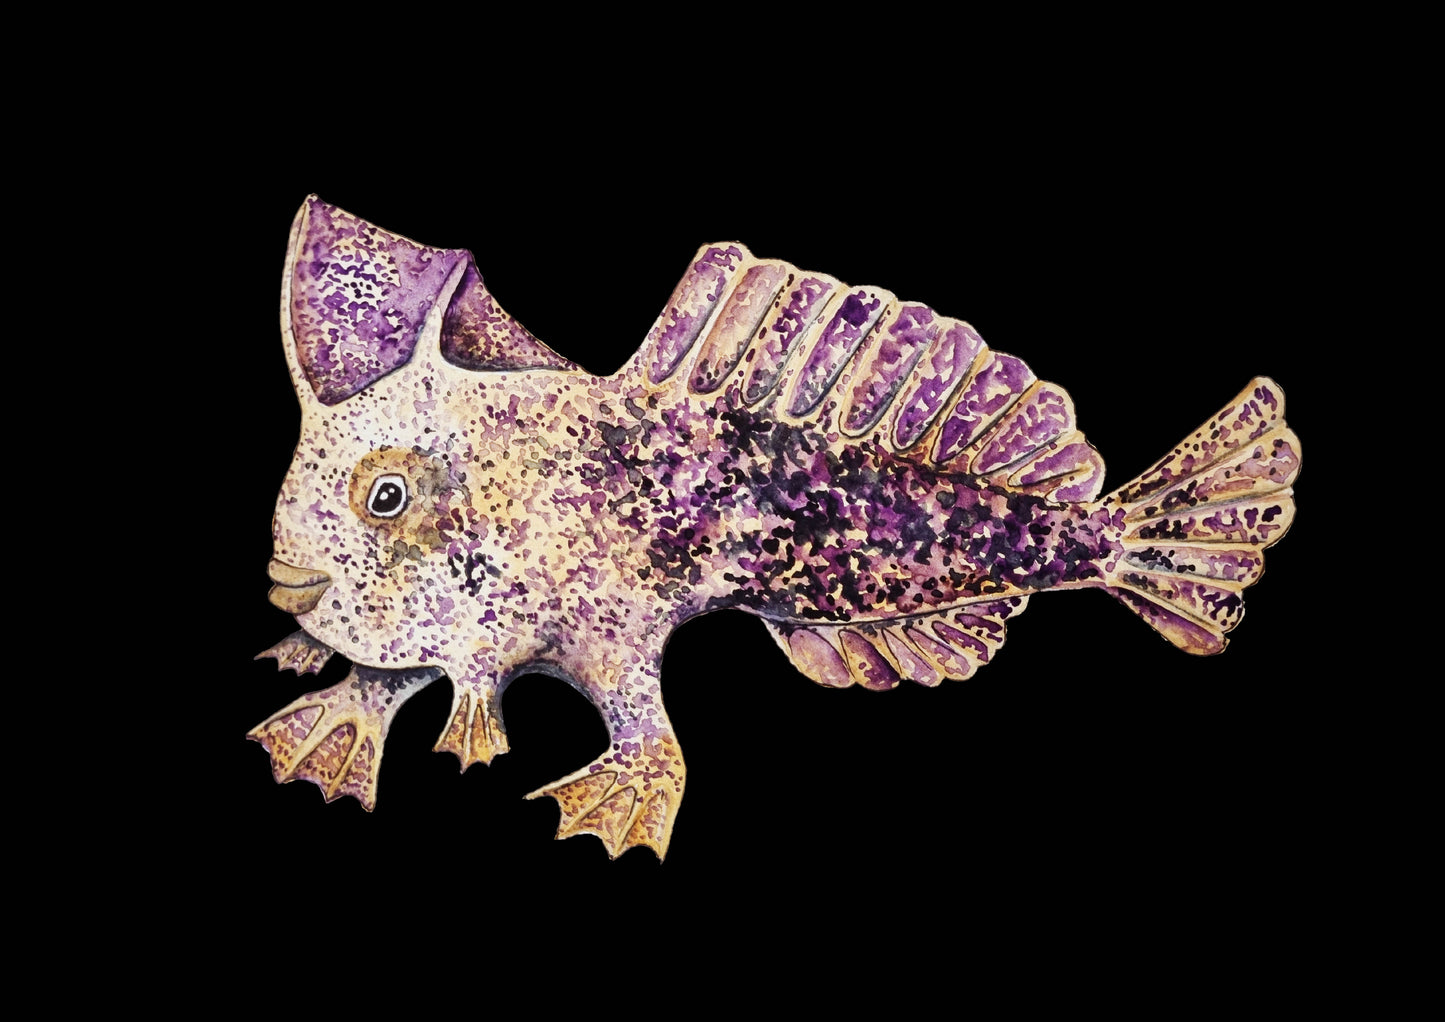 Art Print - Sea Life - Ziebells Handfish